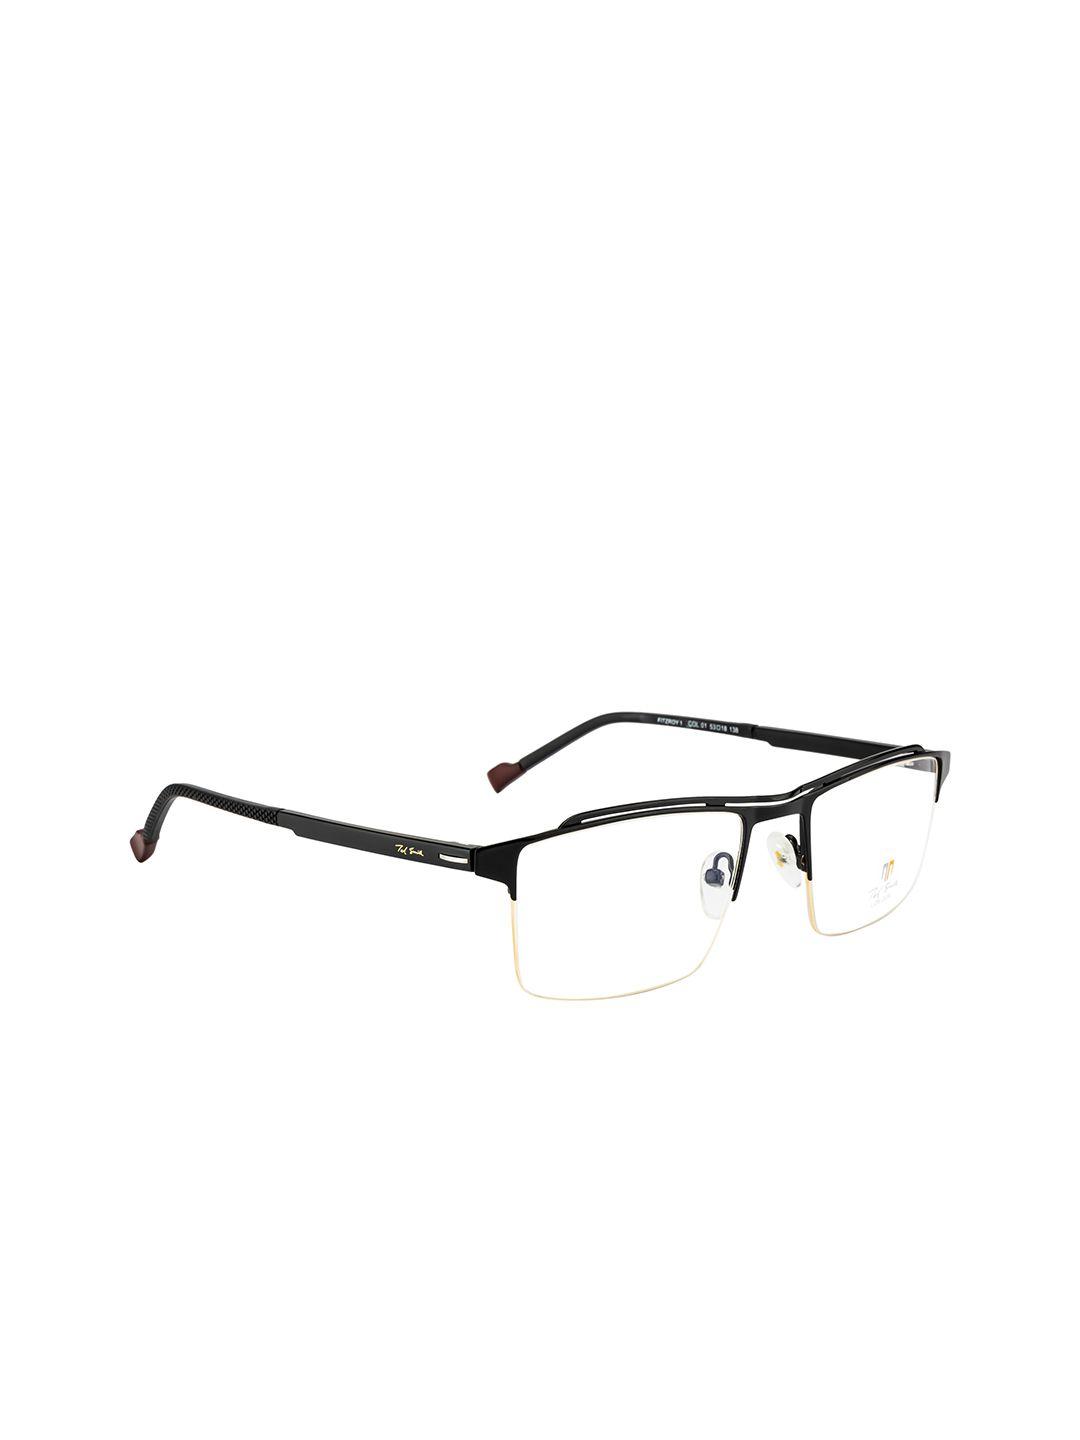 ted smith unisex black half rim wayfarer frames eyeglasses